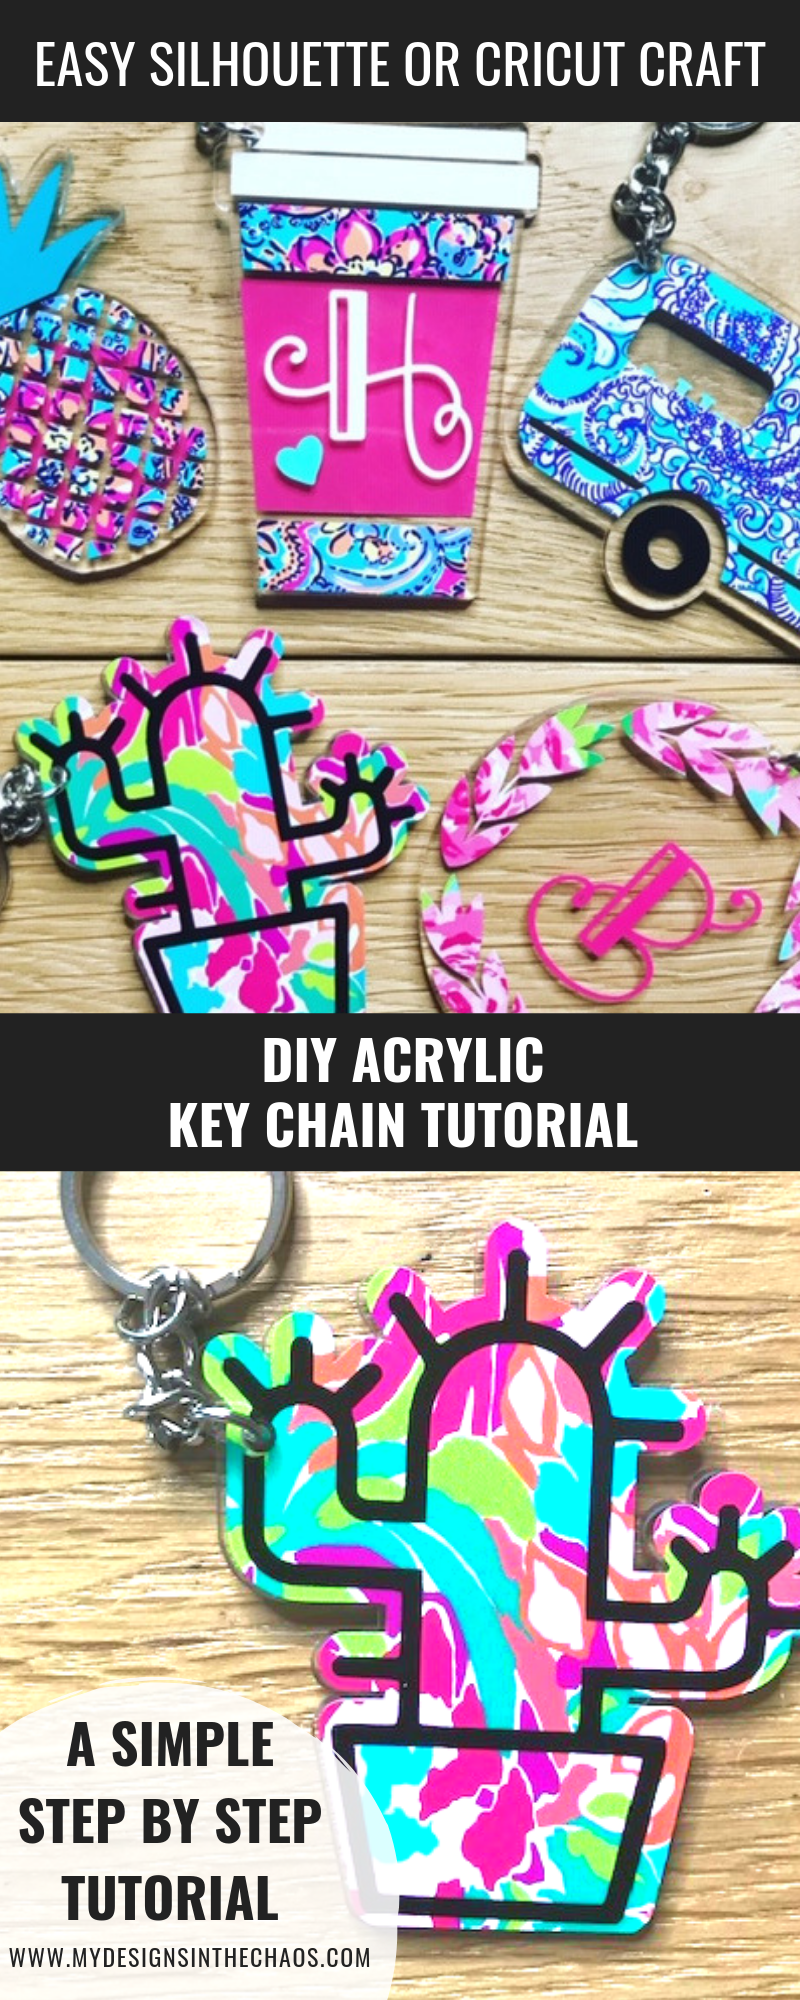 DIY acrylic key chain